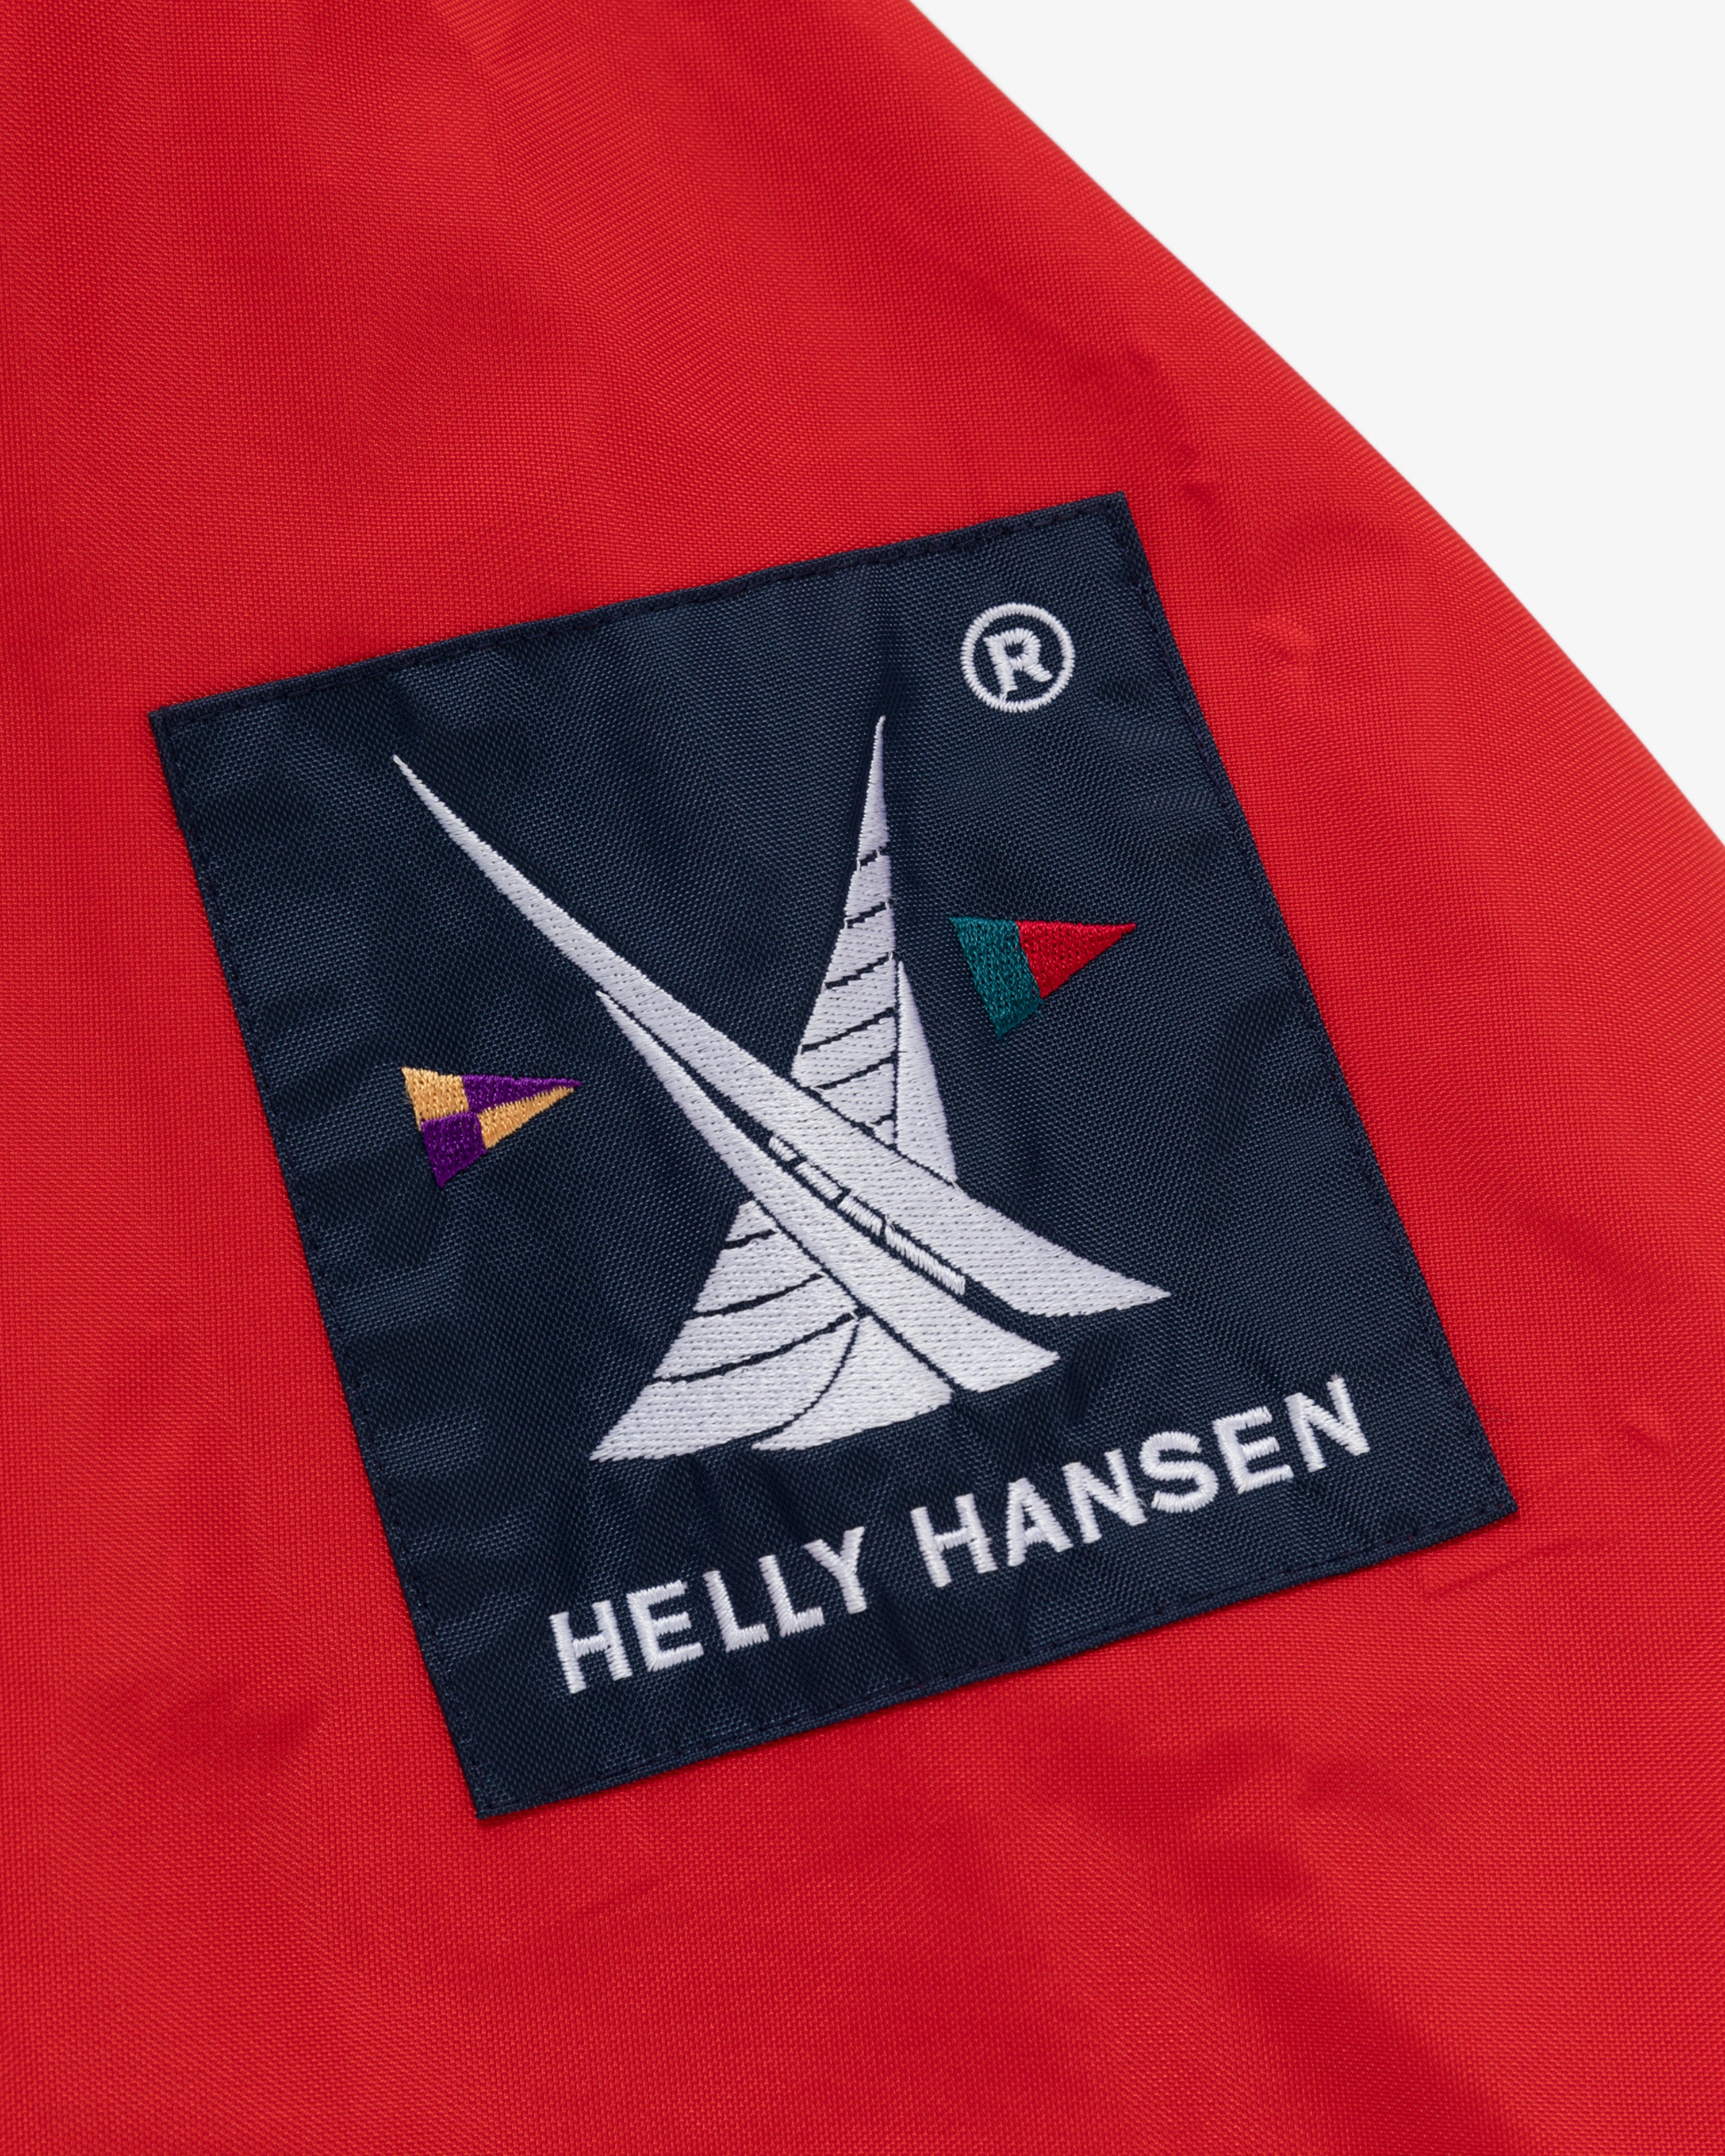 Vintage Helly Hansen Sailing Jacket